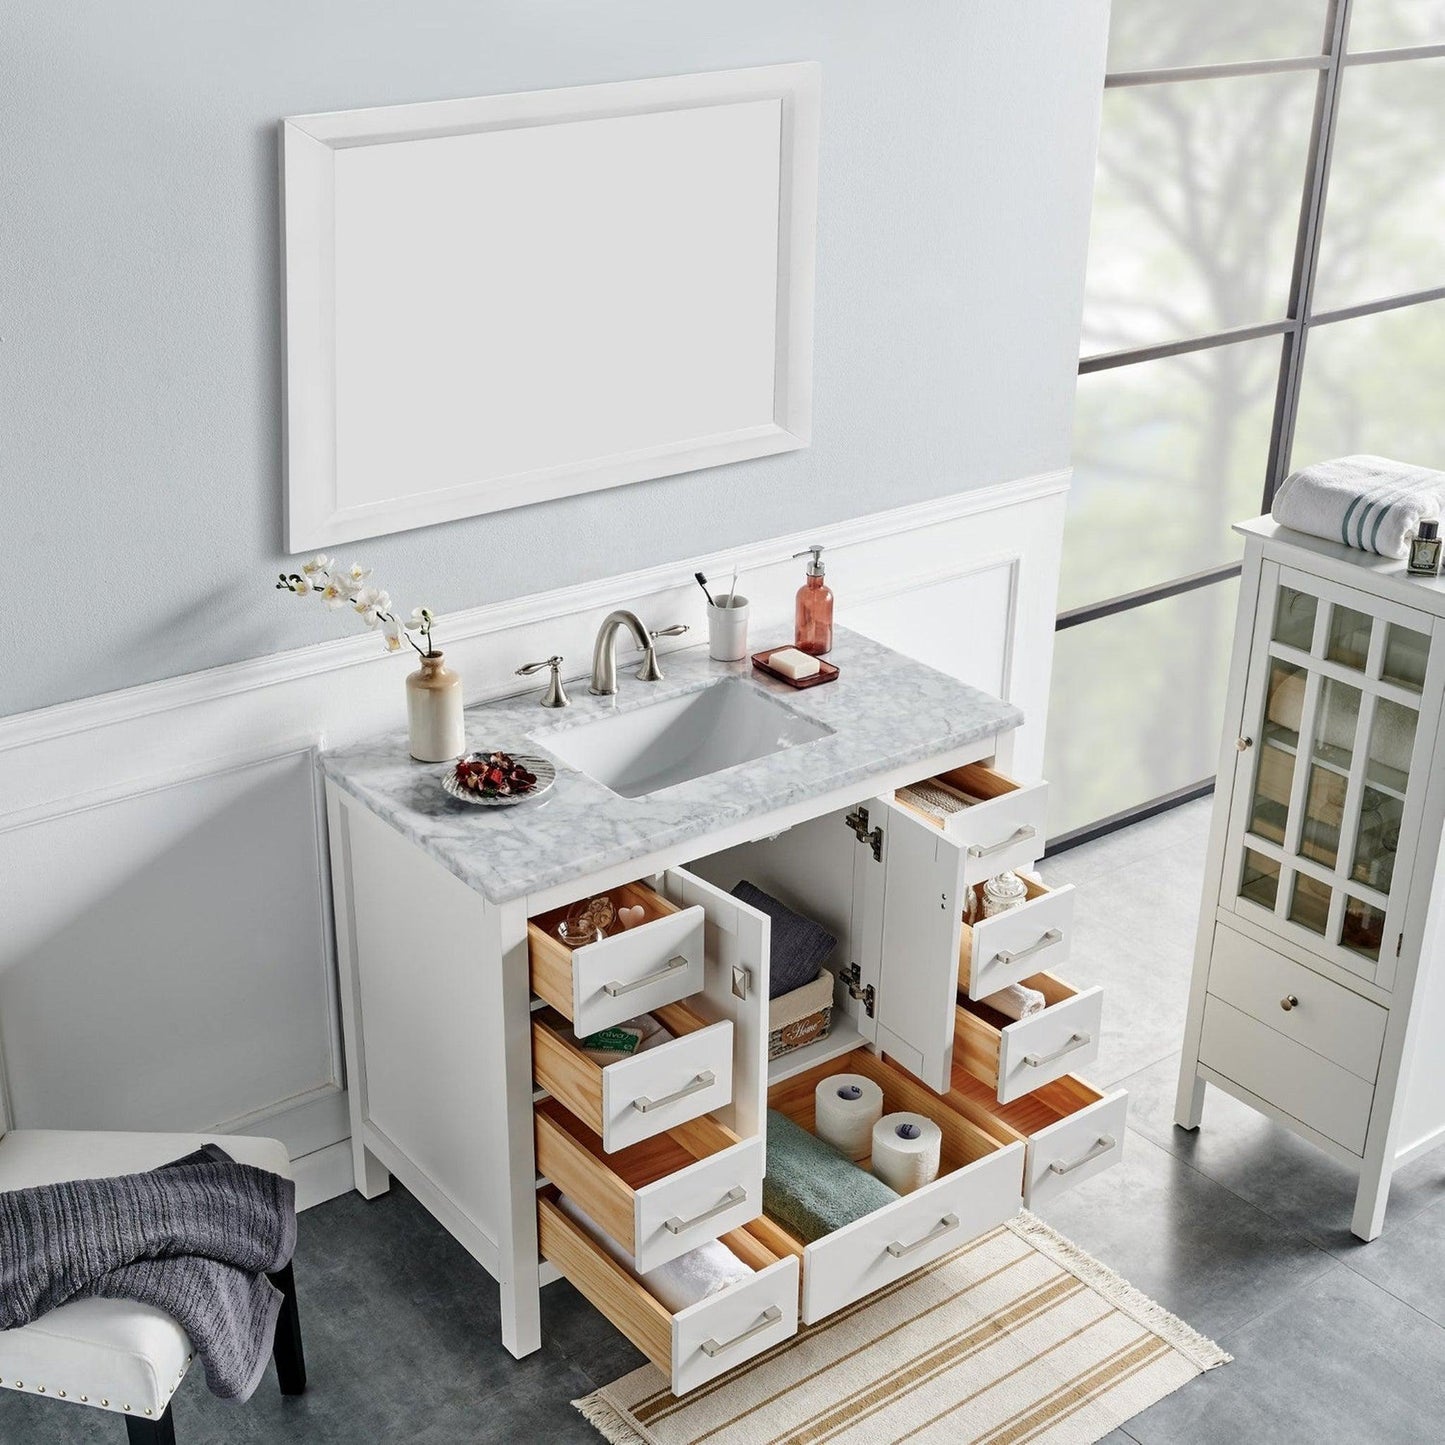 Eviva Aberdeen 42" x 34" Freestanding White Bathroom Vanity With Single Undermount Sink